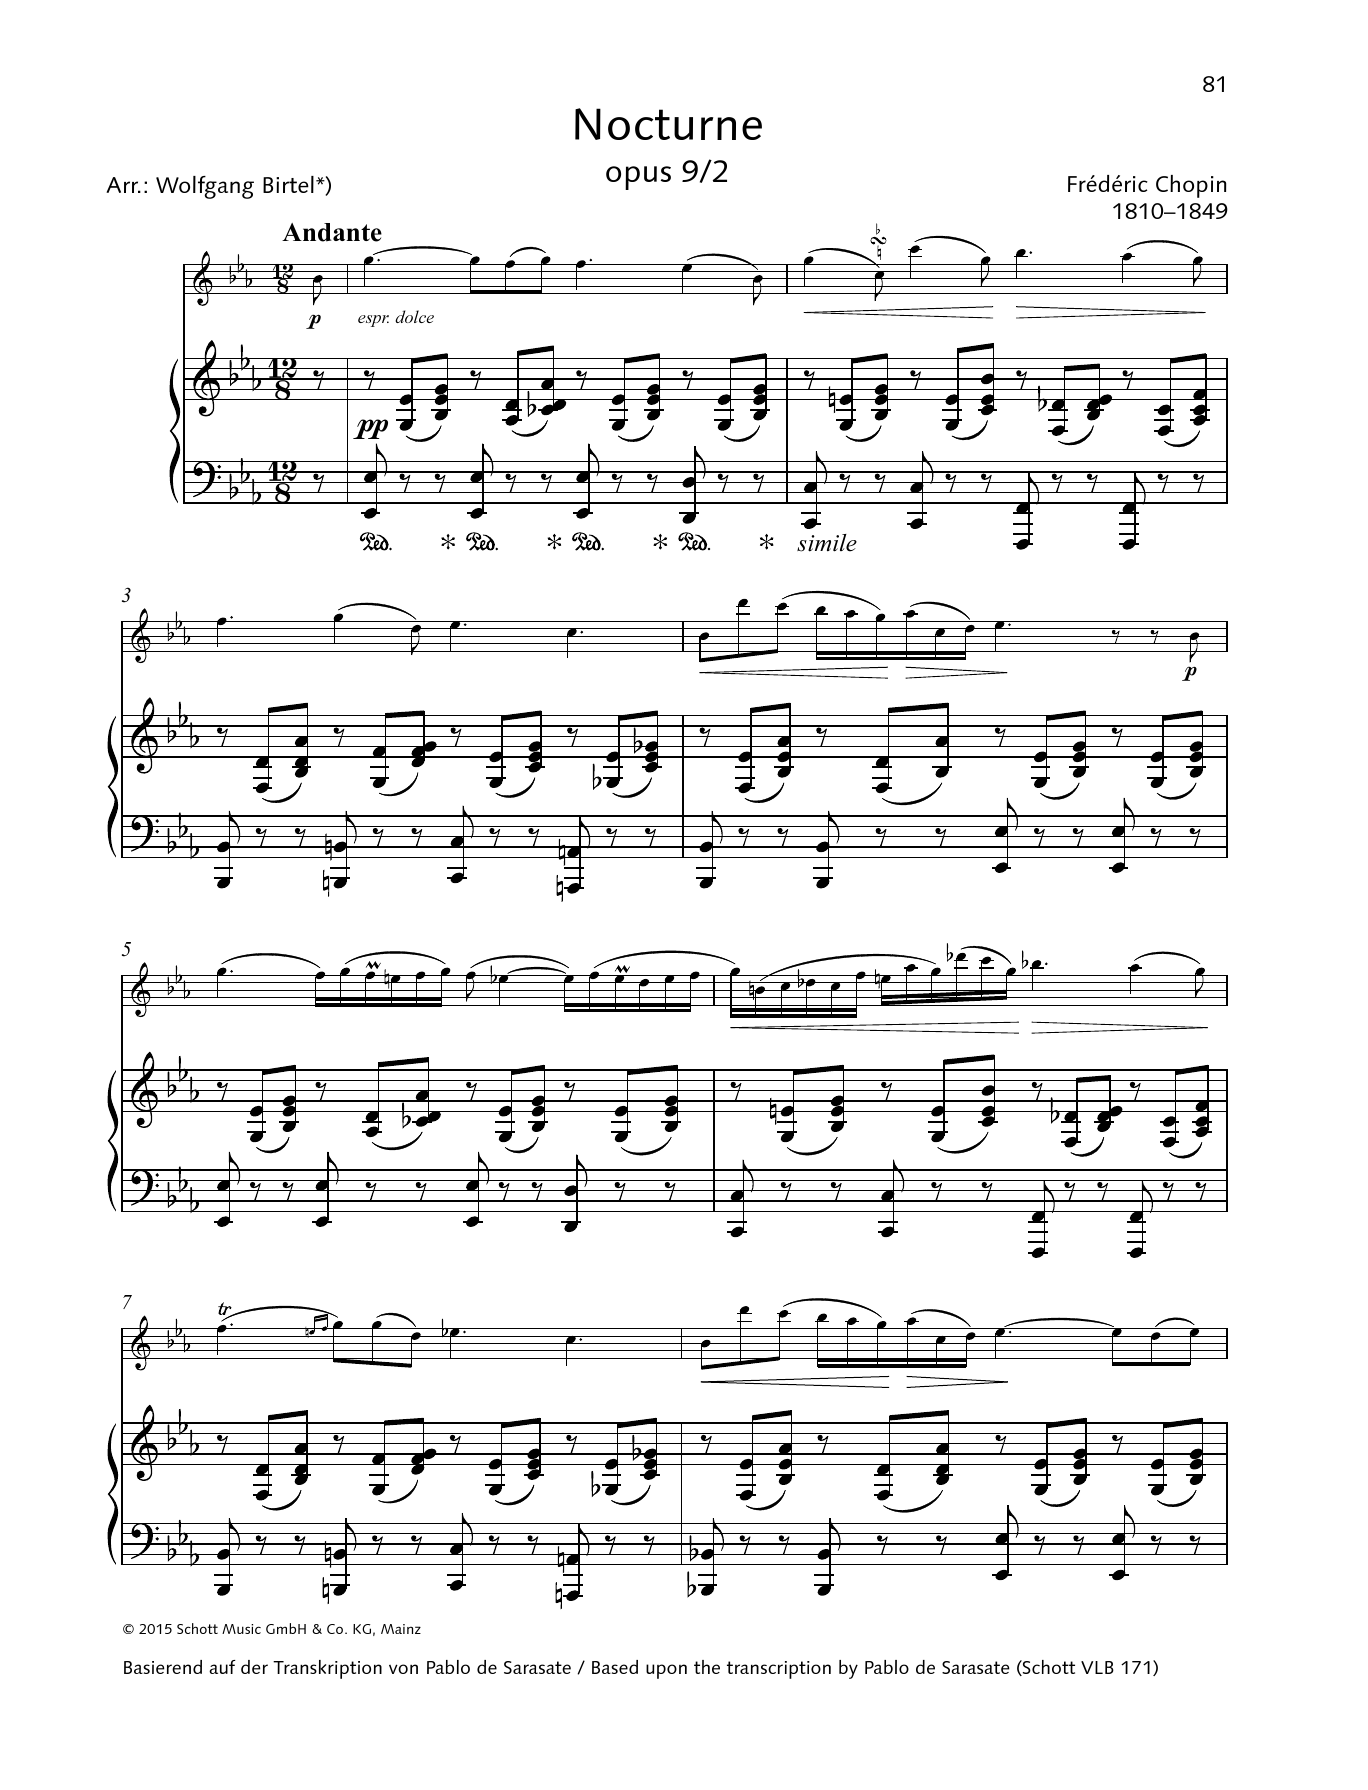 Download Frédéric Chopin Nocturne E-flat major Sheet Music